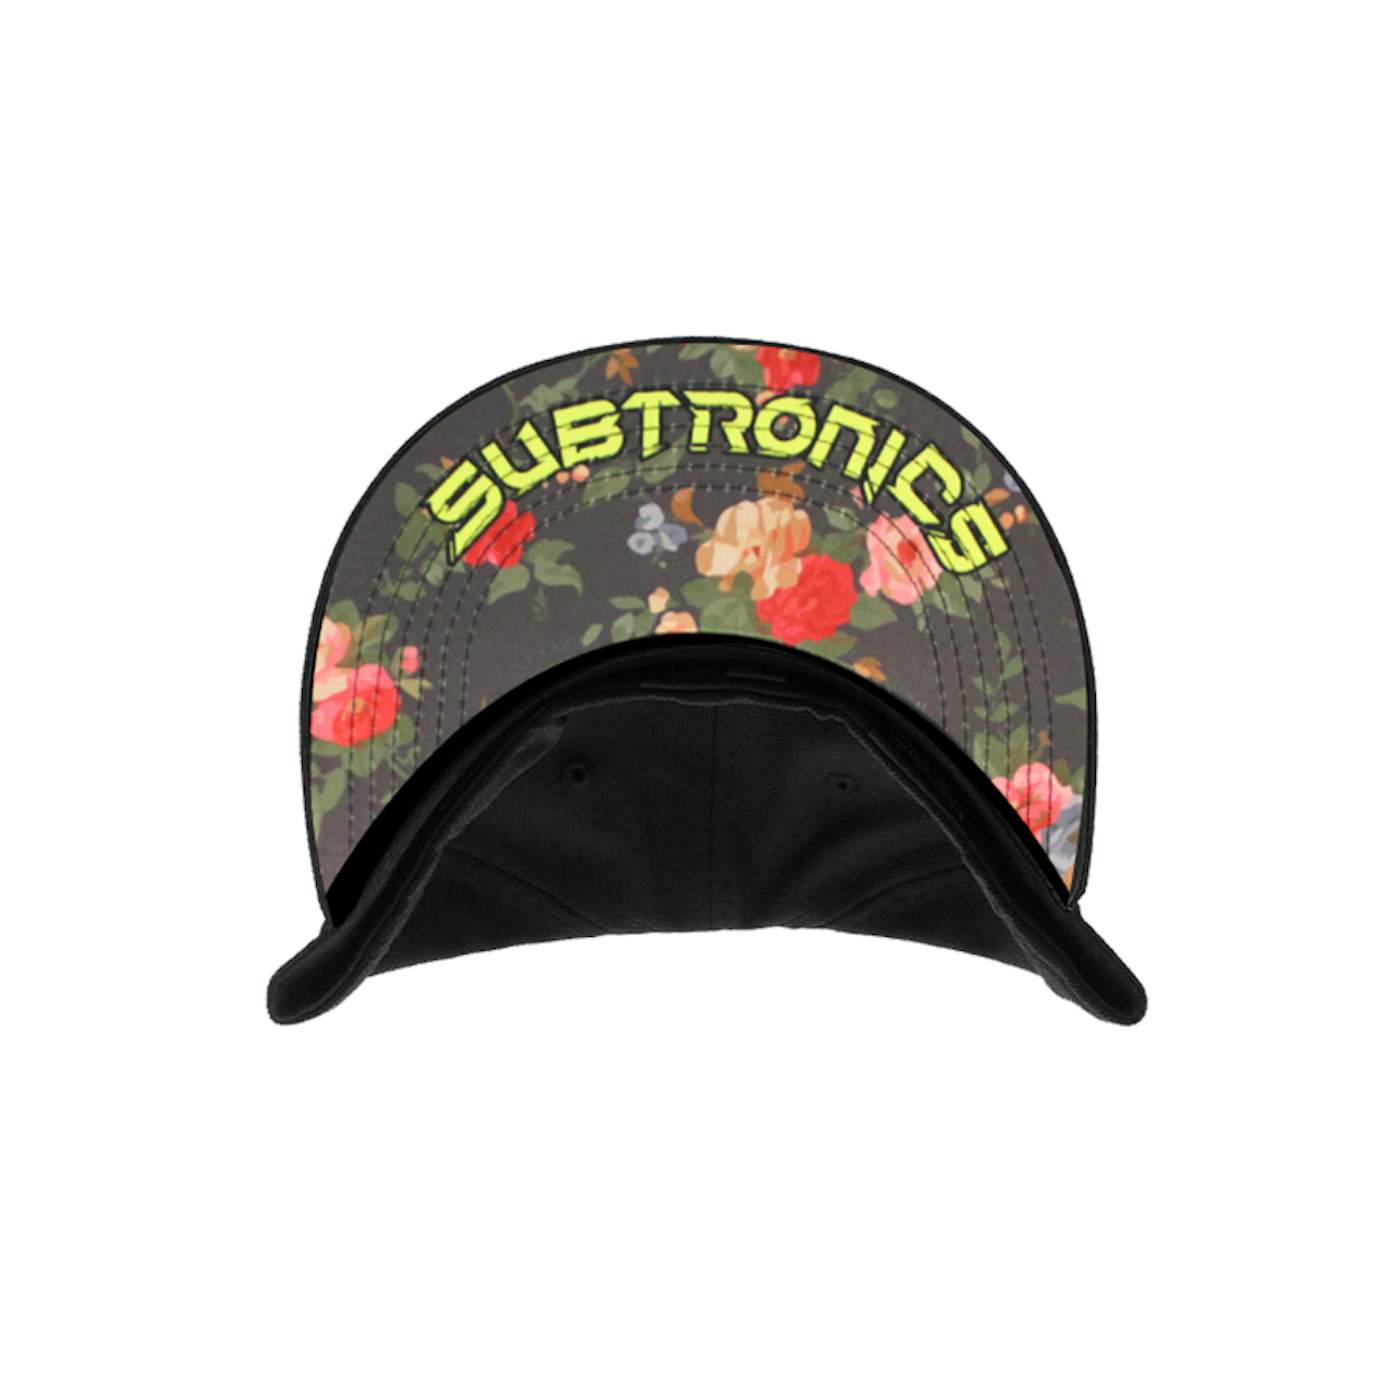 Subtronics Jetpack Snapback (Black w/ Floral Bill)